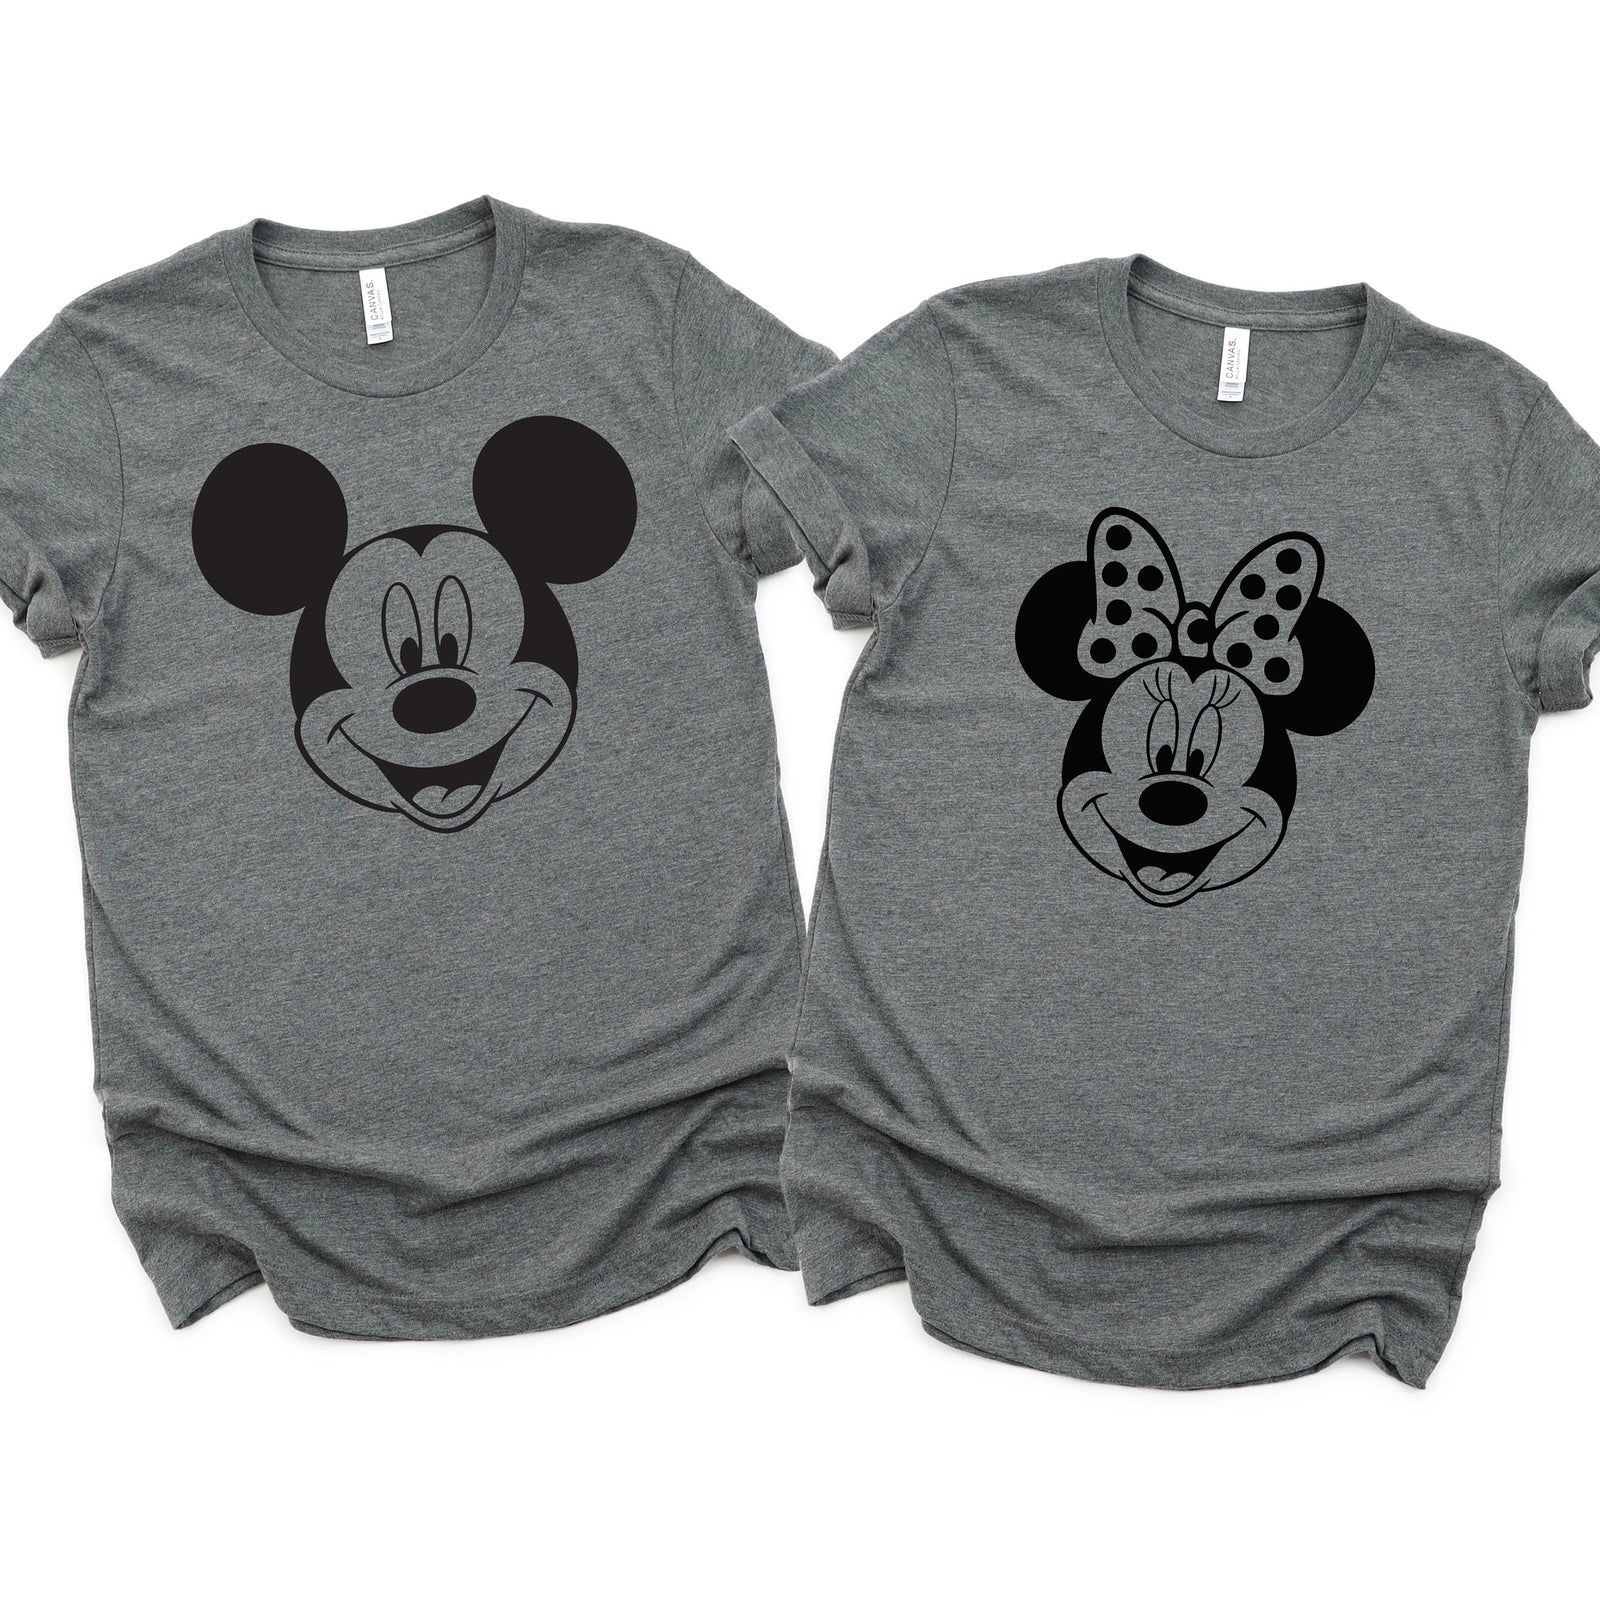 Minnie and Mickey Adult Unisex Shirts - Disney Couples - Matching Shirts -Magic Kingdom Characters